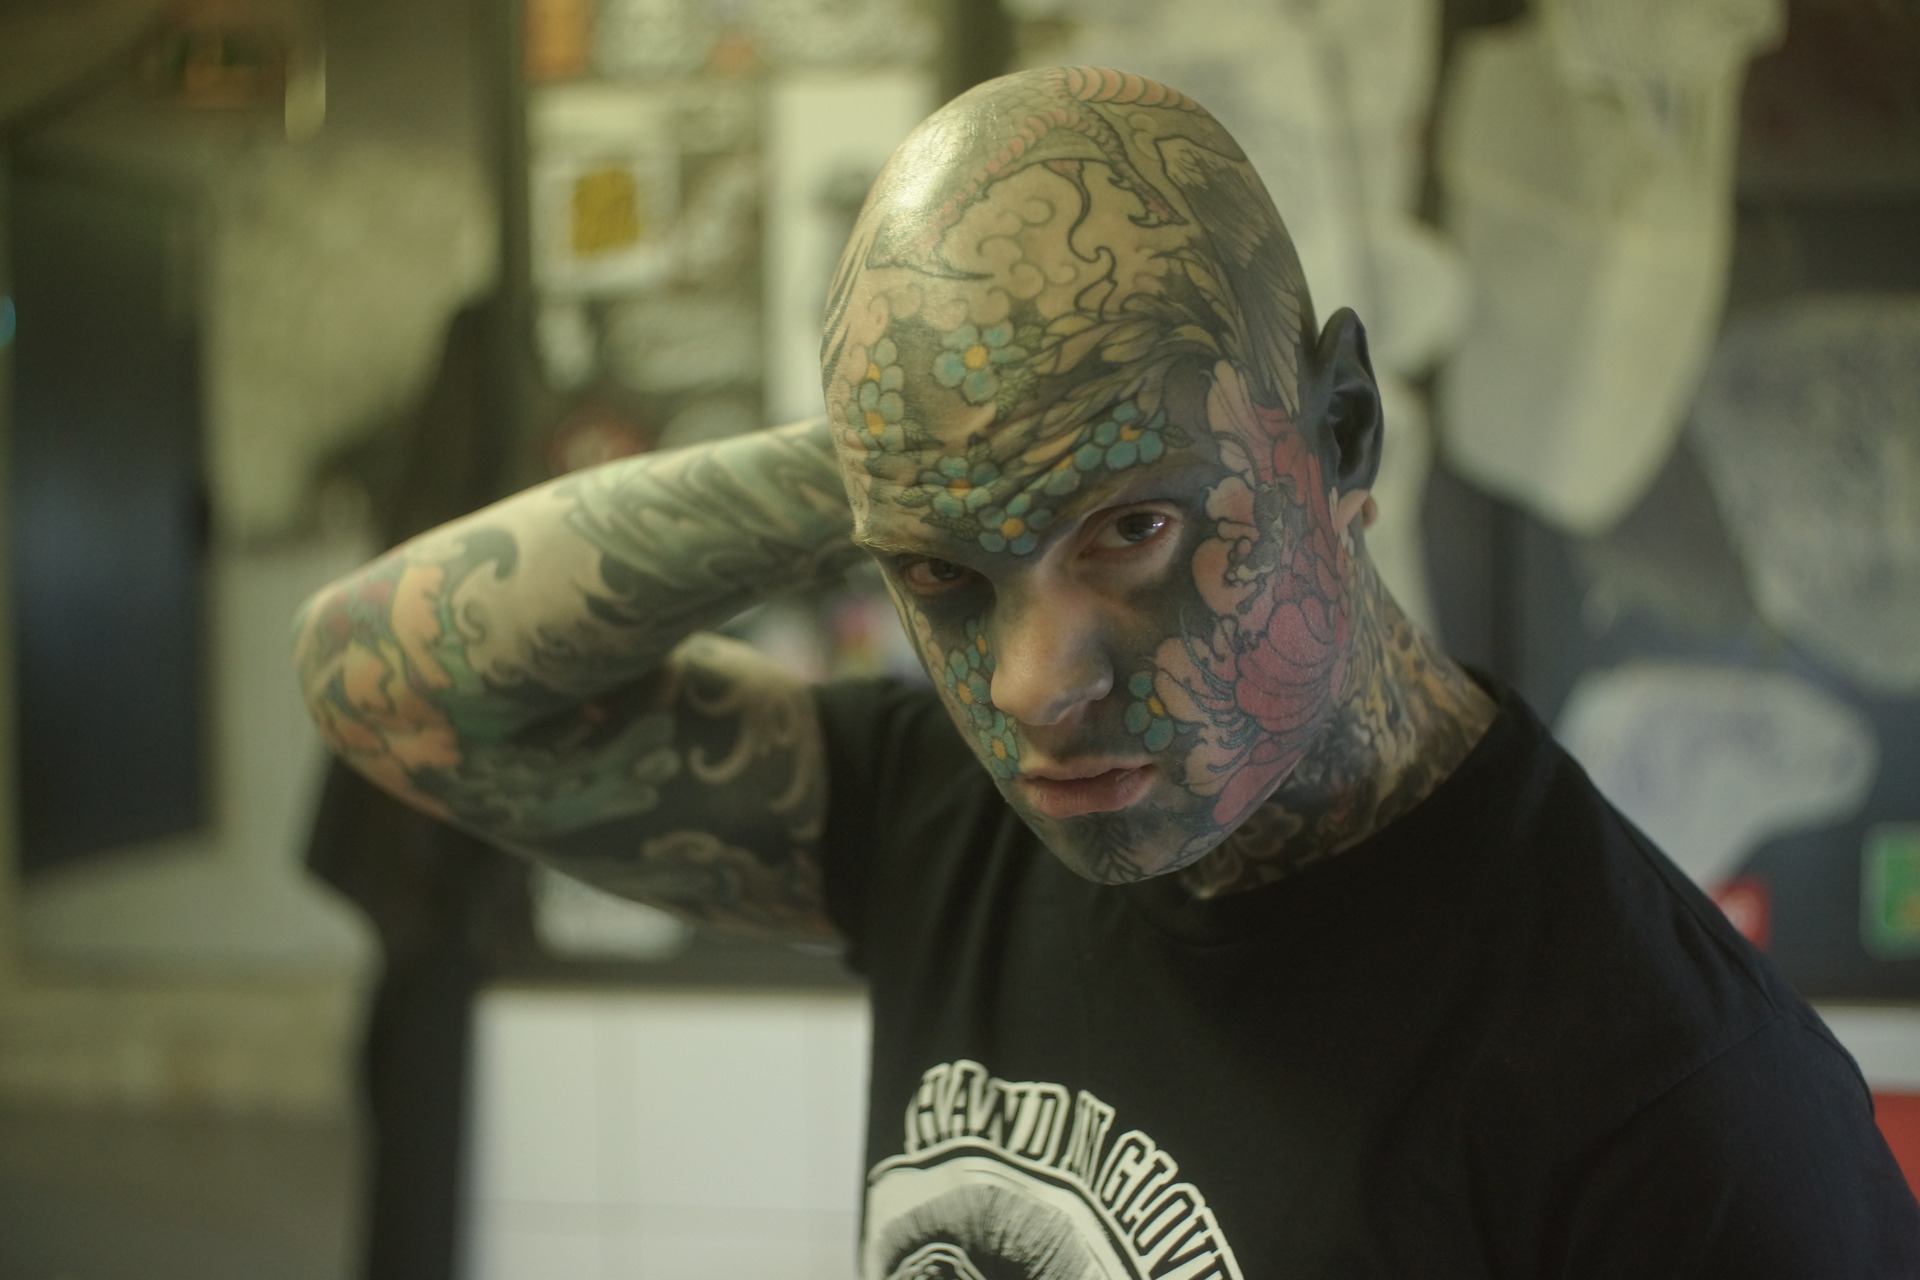 Man who tattooed his eyes black loses teaching job - NZ Herald